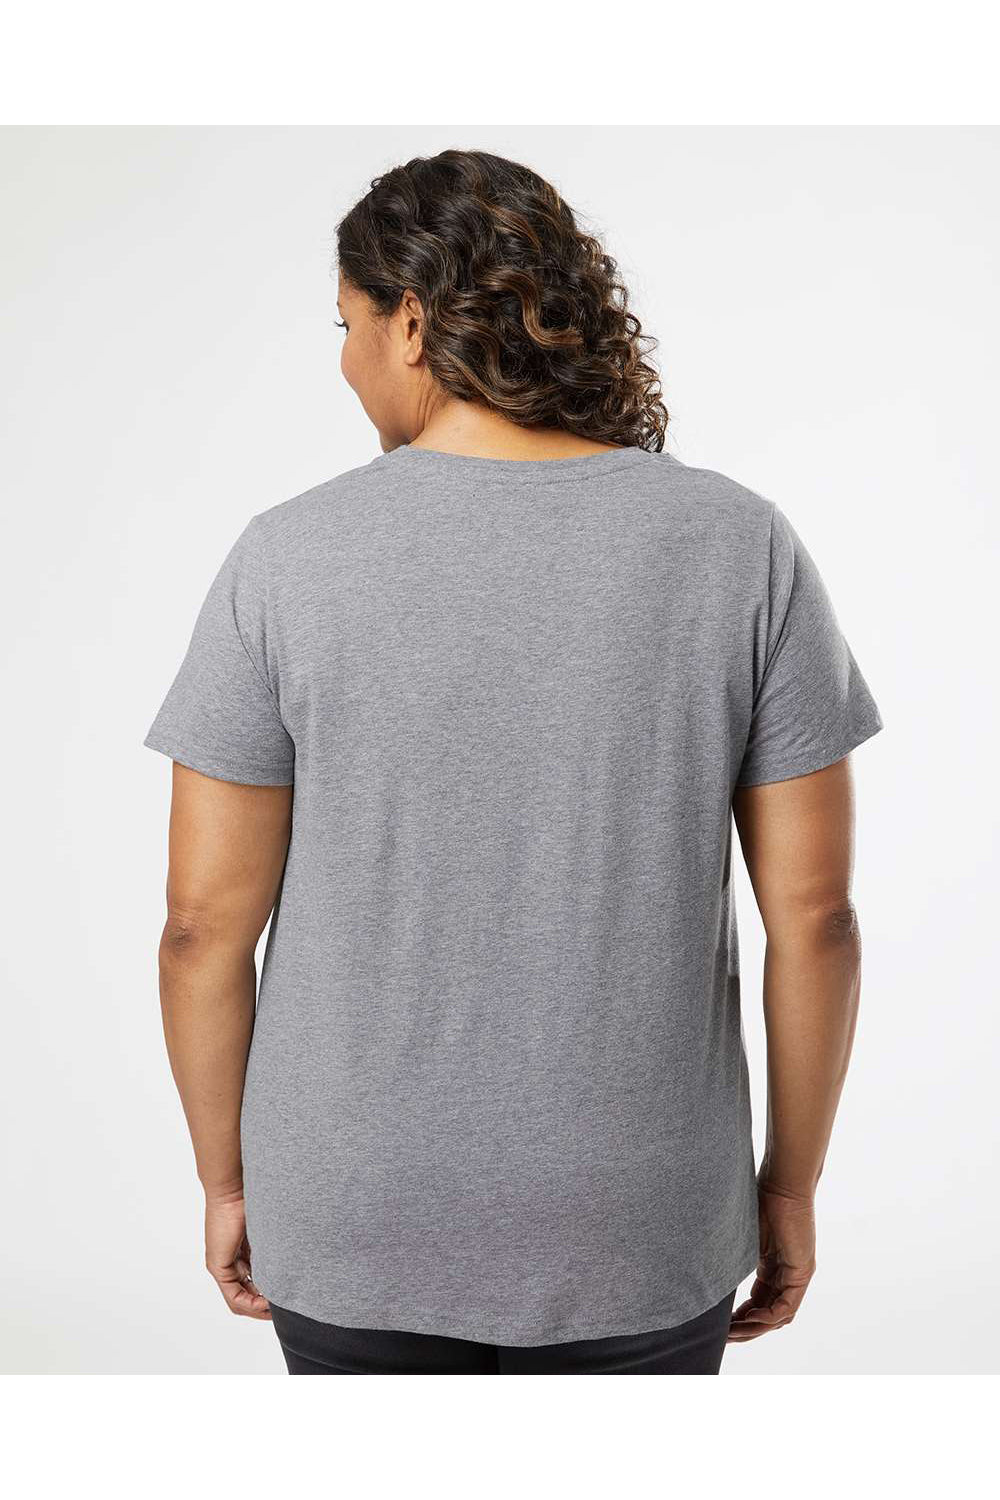 LAT 3816 Womens Curvy Collection Fine Jersey Short Sleeve Crewneck T-Shirt Heather Granite Grey Model Back